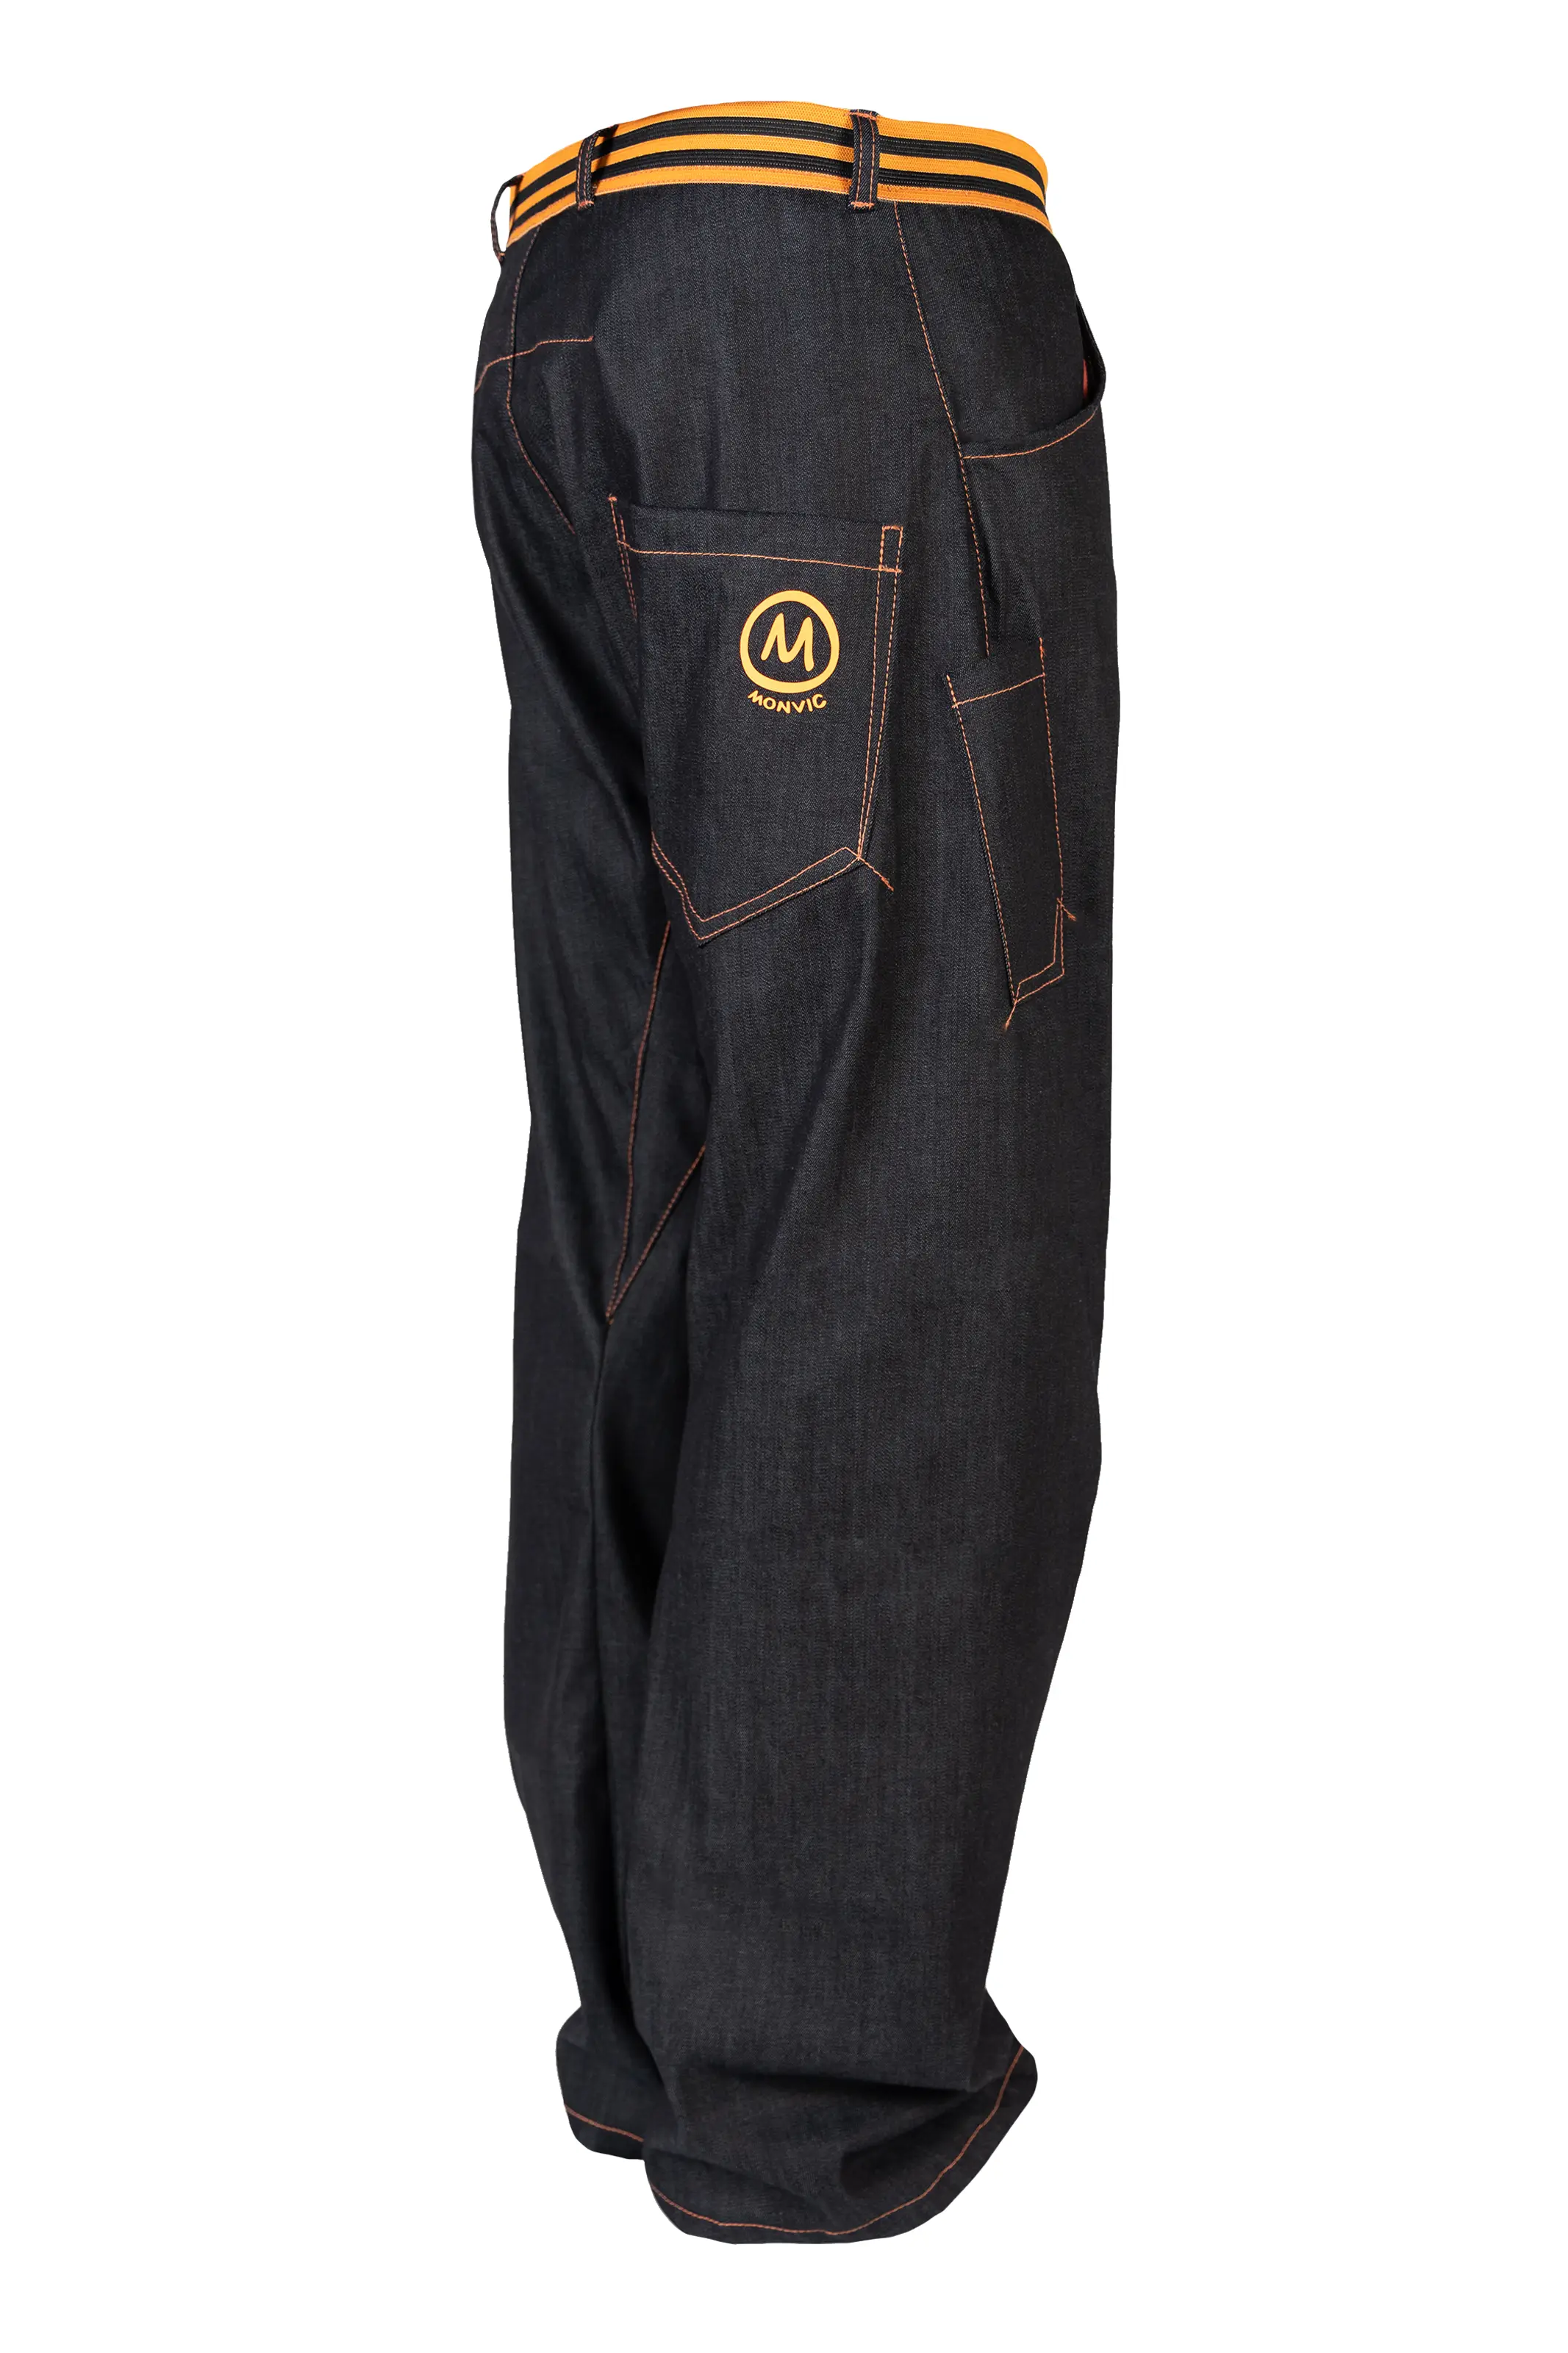 Men's denim climbing jeans with elastic waist - orange stitching - GEO STRIPES Monvic